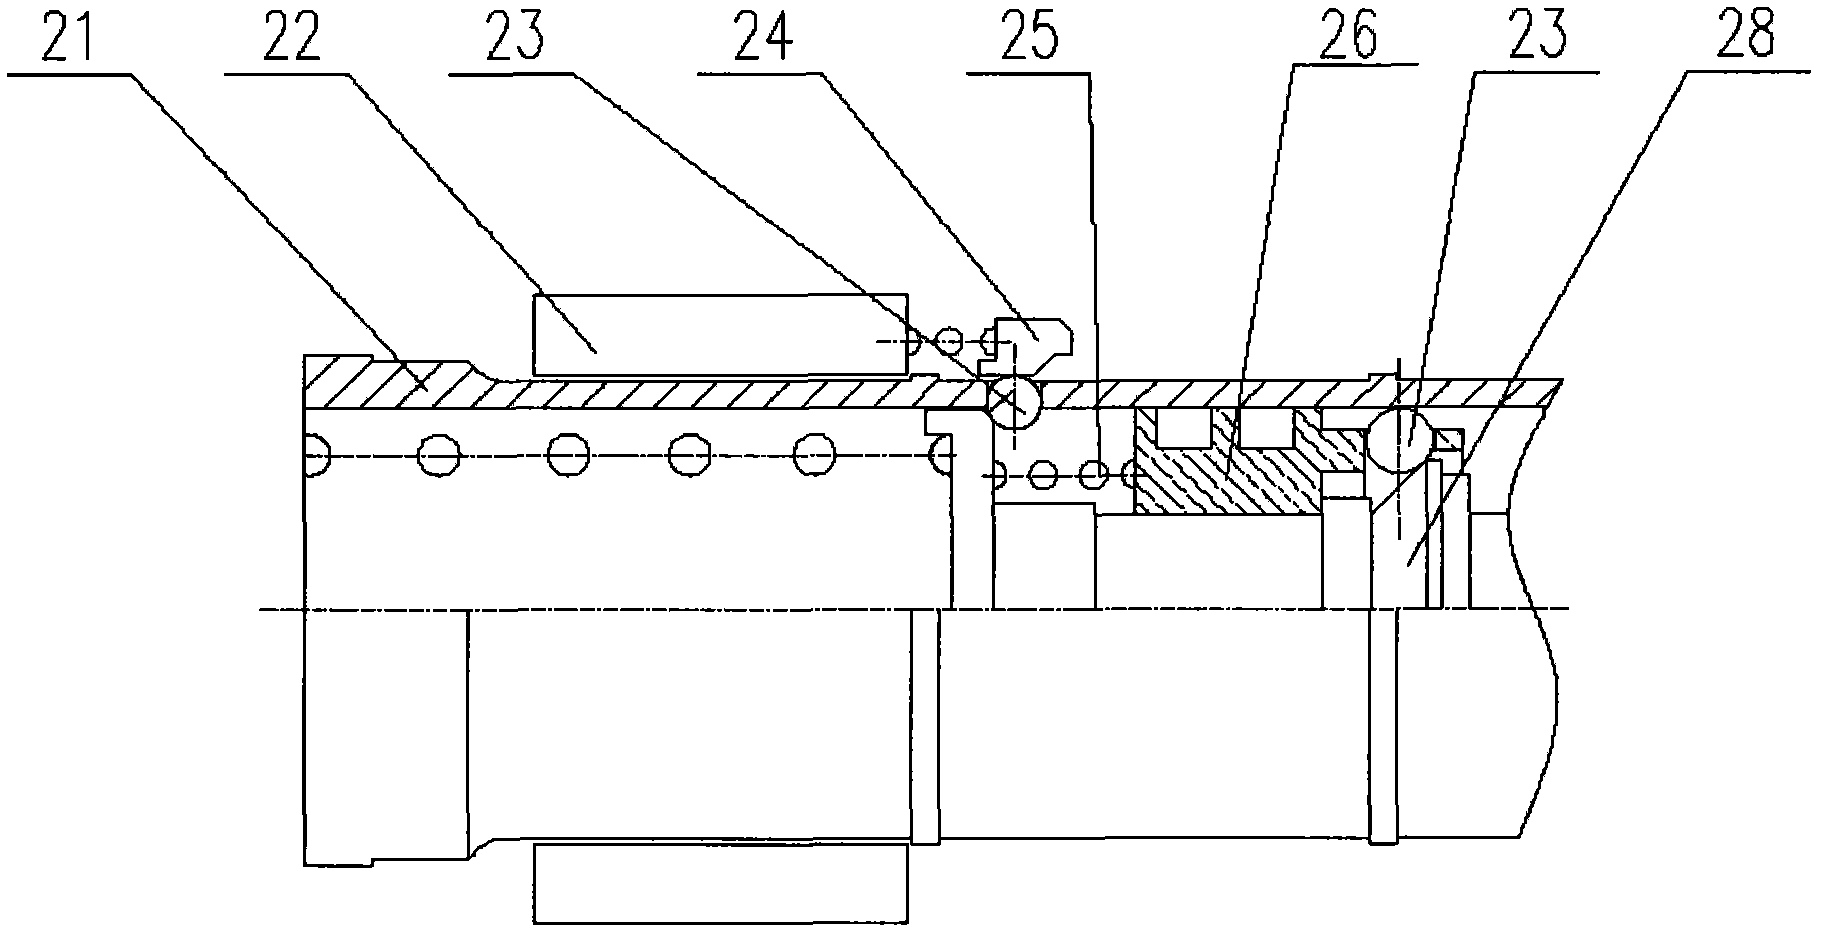 Actuator cylinder position locking and unlocking mechanism